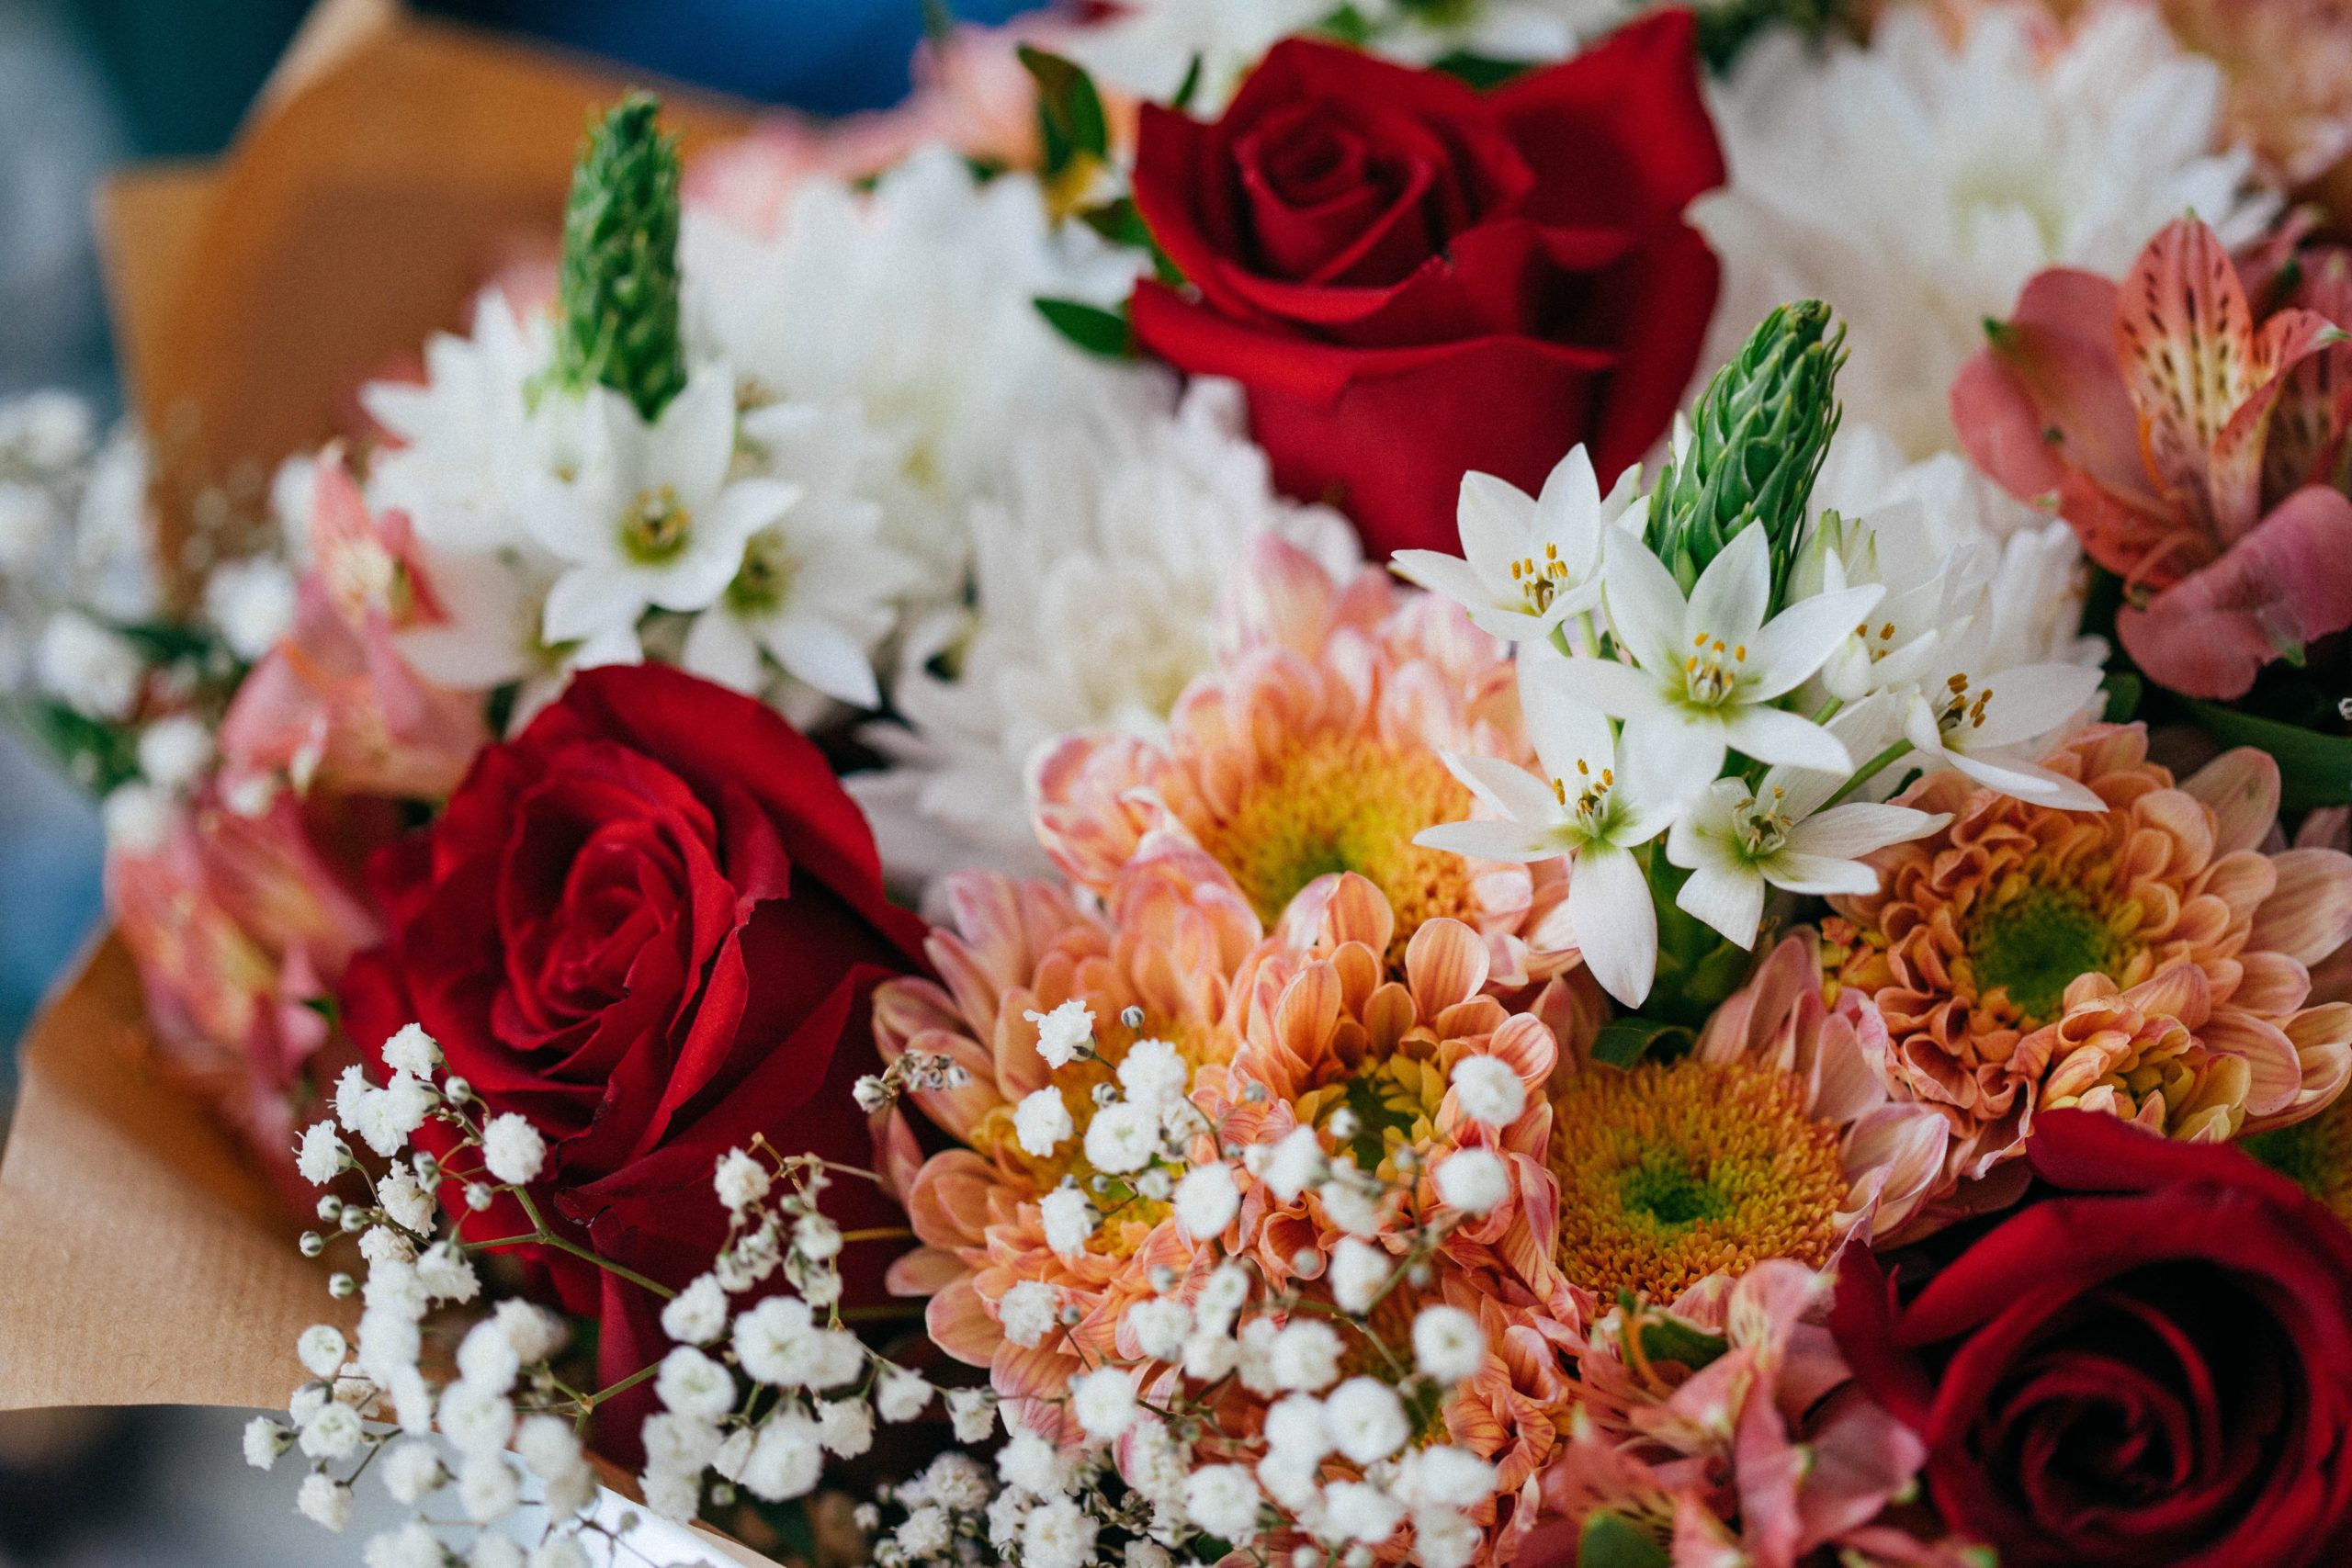 A closeup of a bouquet of flowers.